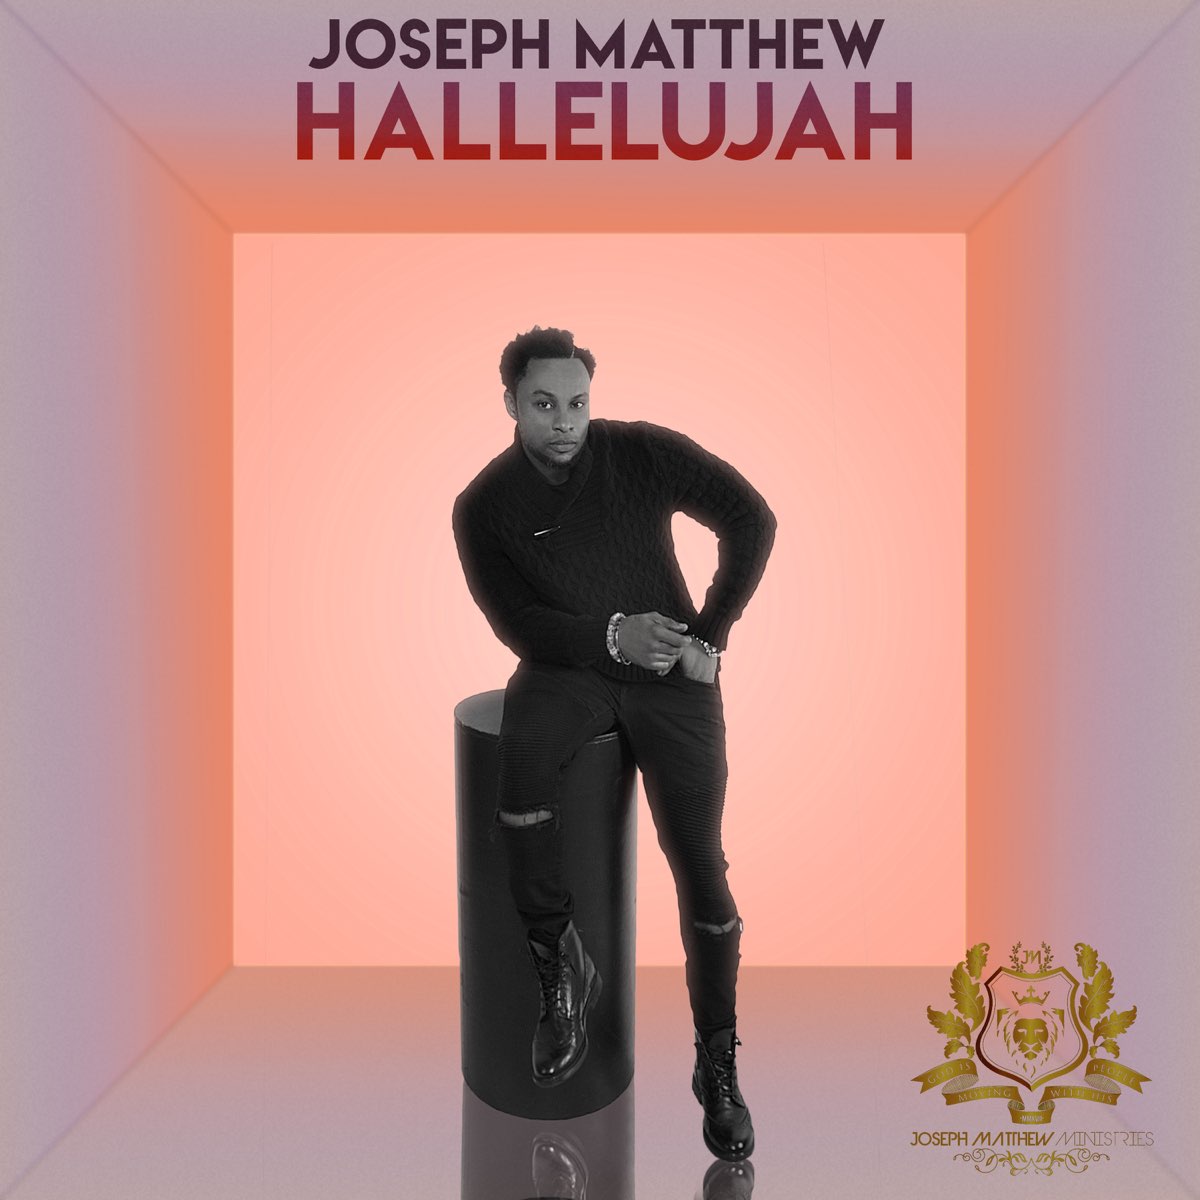 Hallelujah - Single - Album by Joseph Matthew - Apple Music